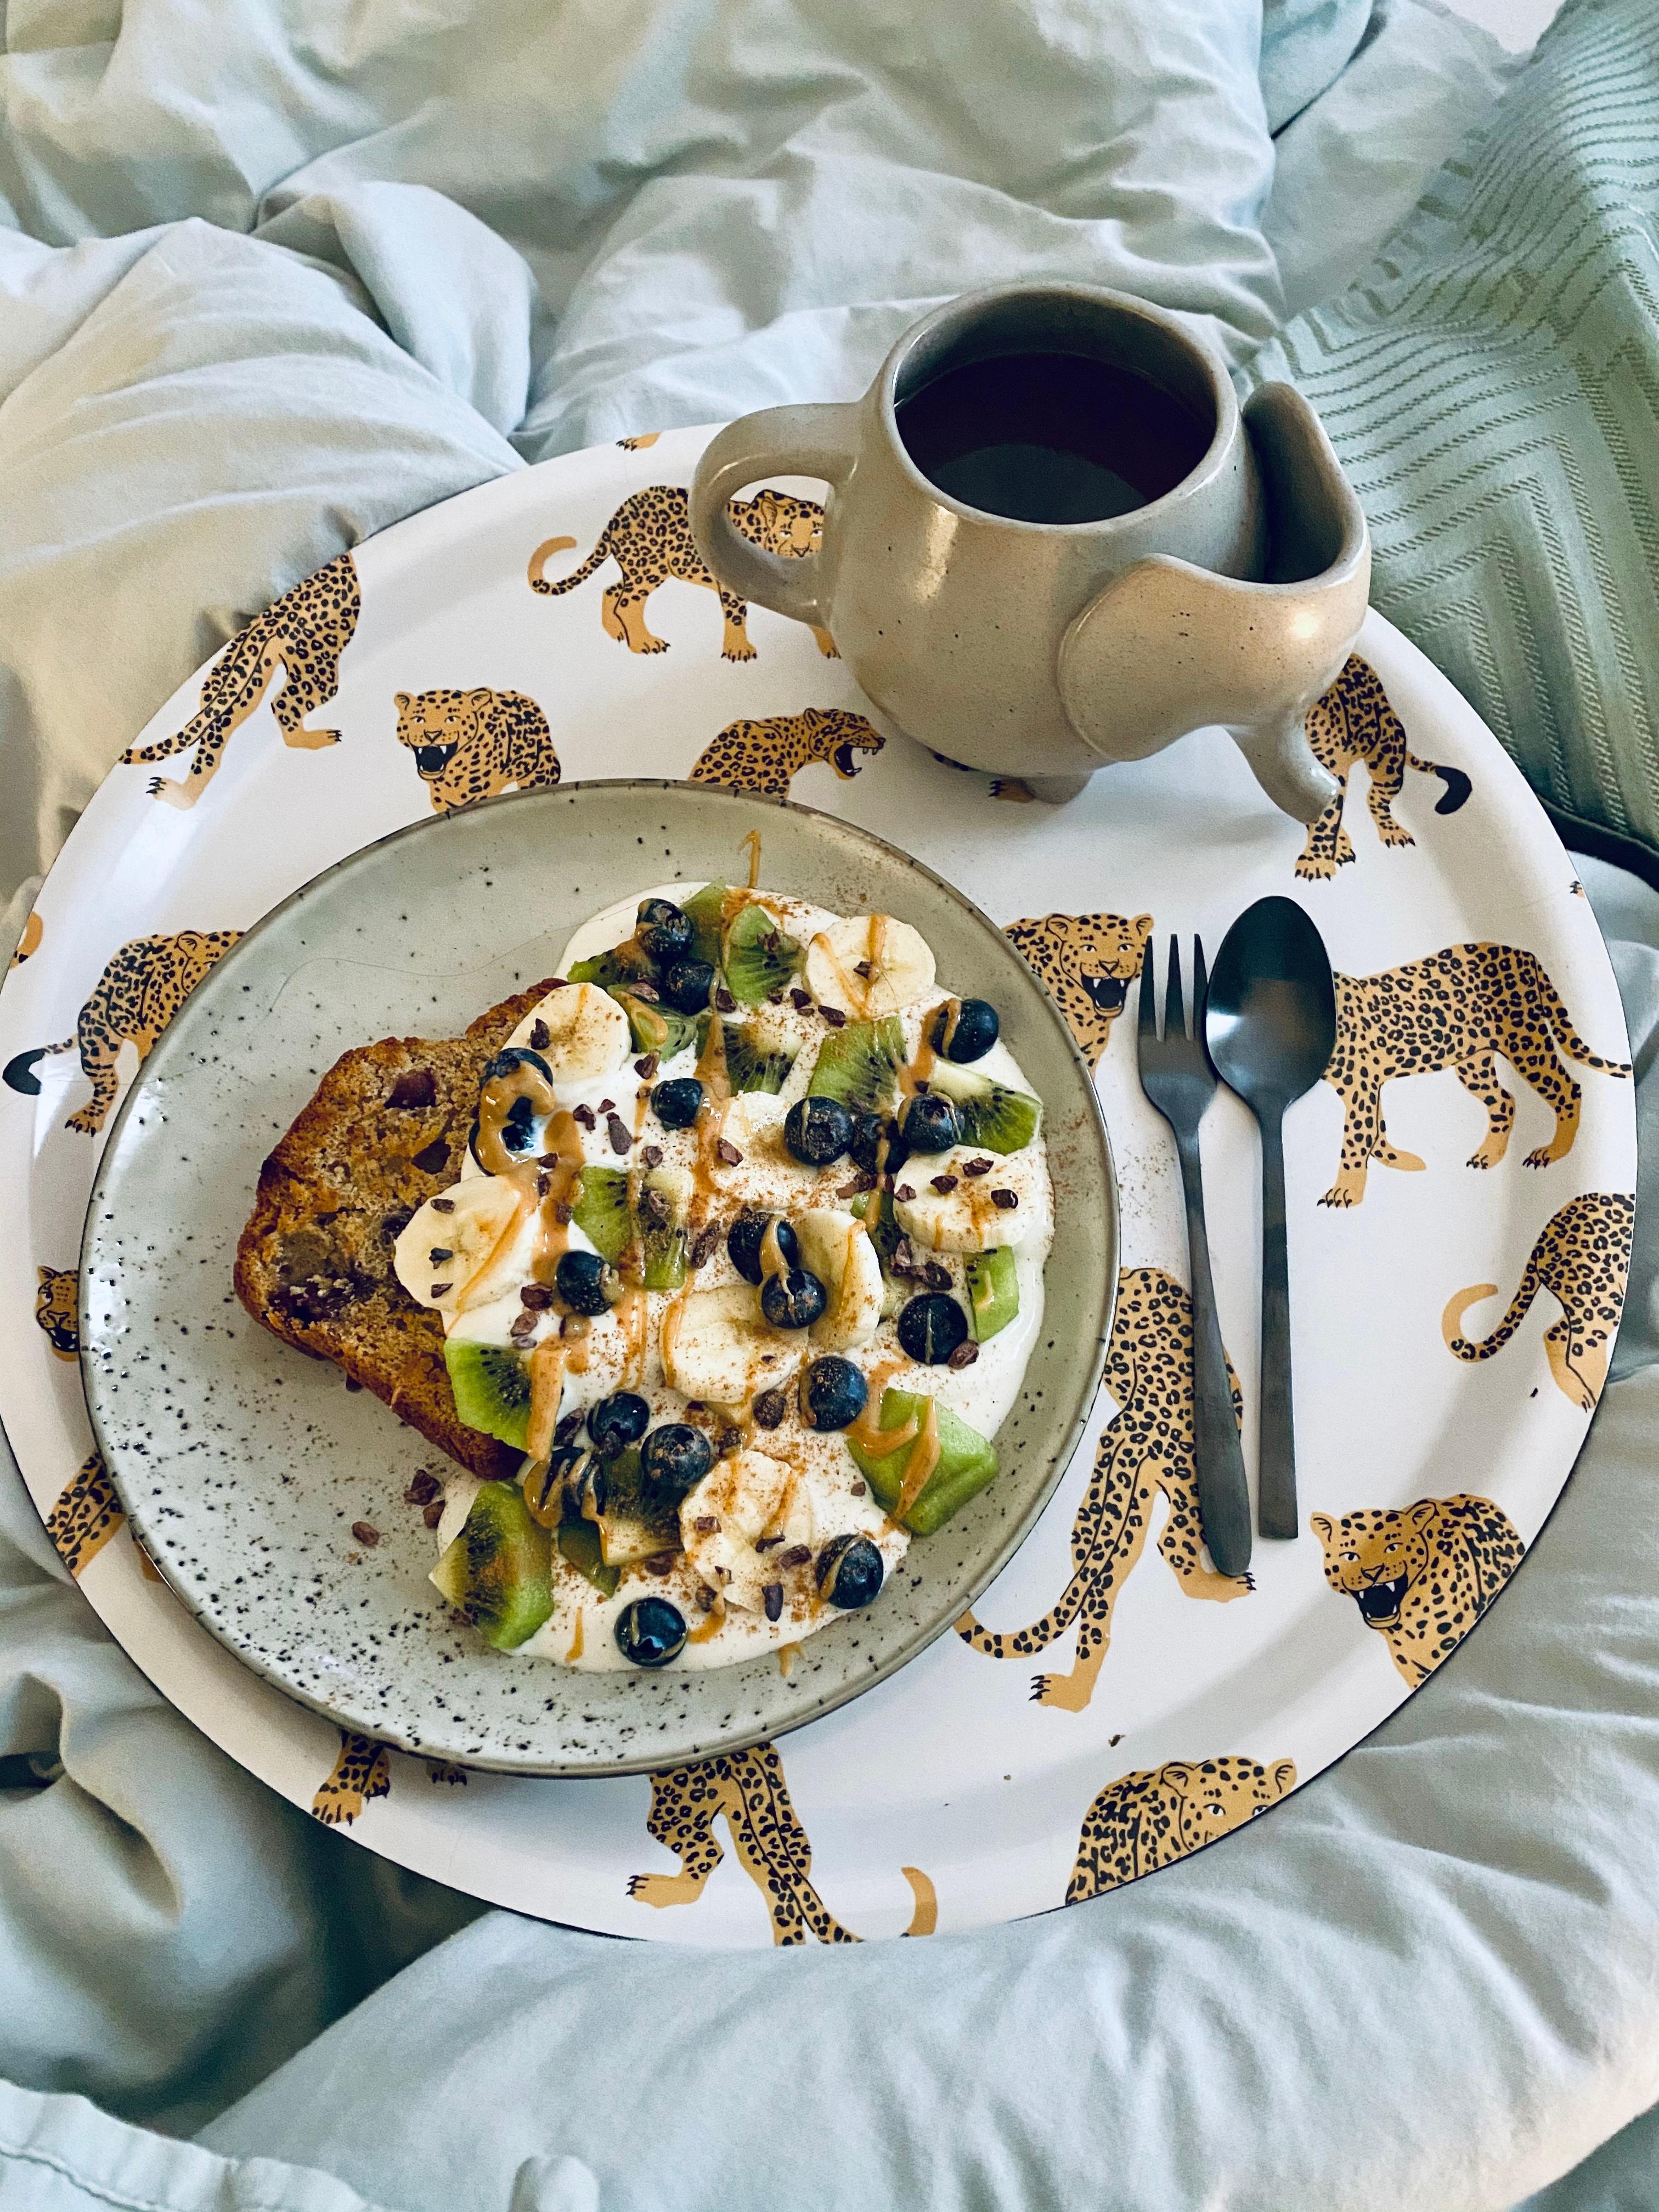 Sunday Breakfast in Bed 🙊 
#lazysunday #homemade #bananabread #soyjoghurt #fruitsfruitsfruits #jasminetea